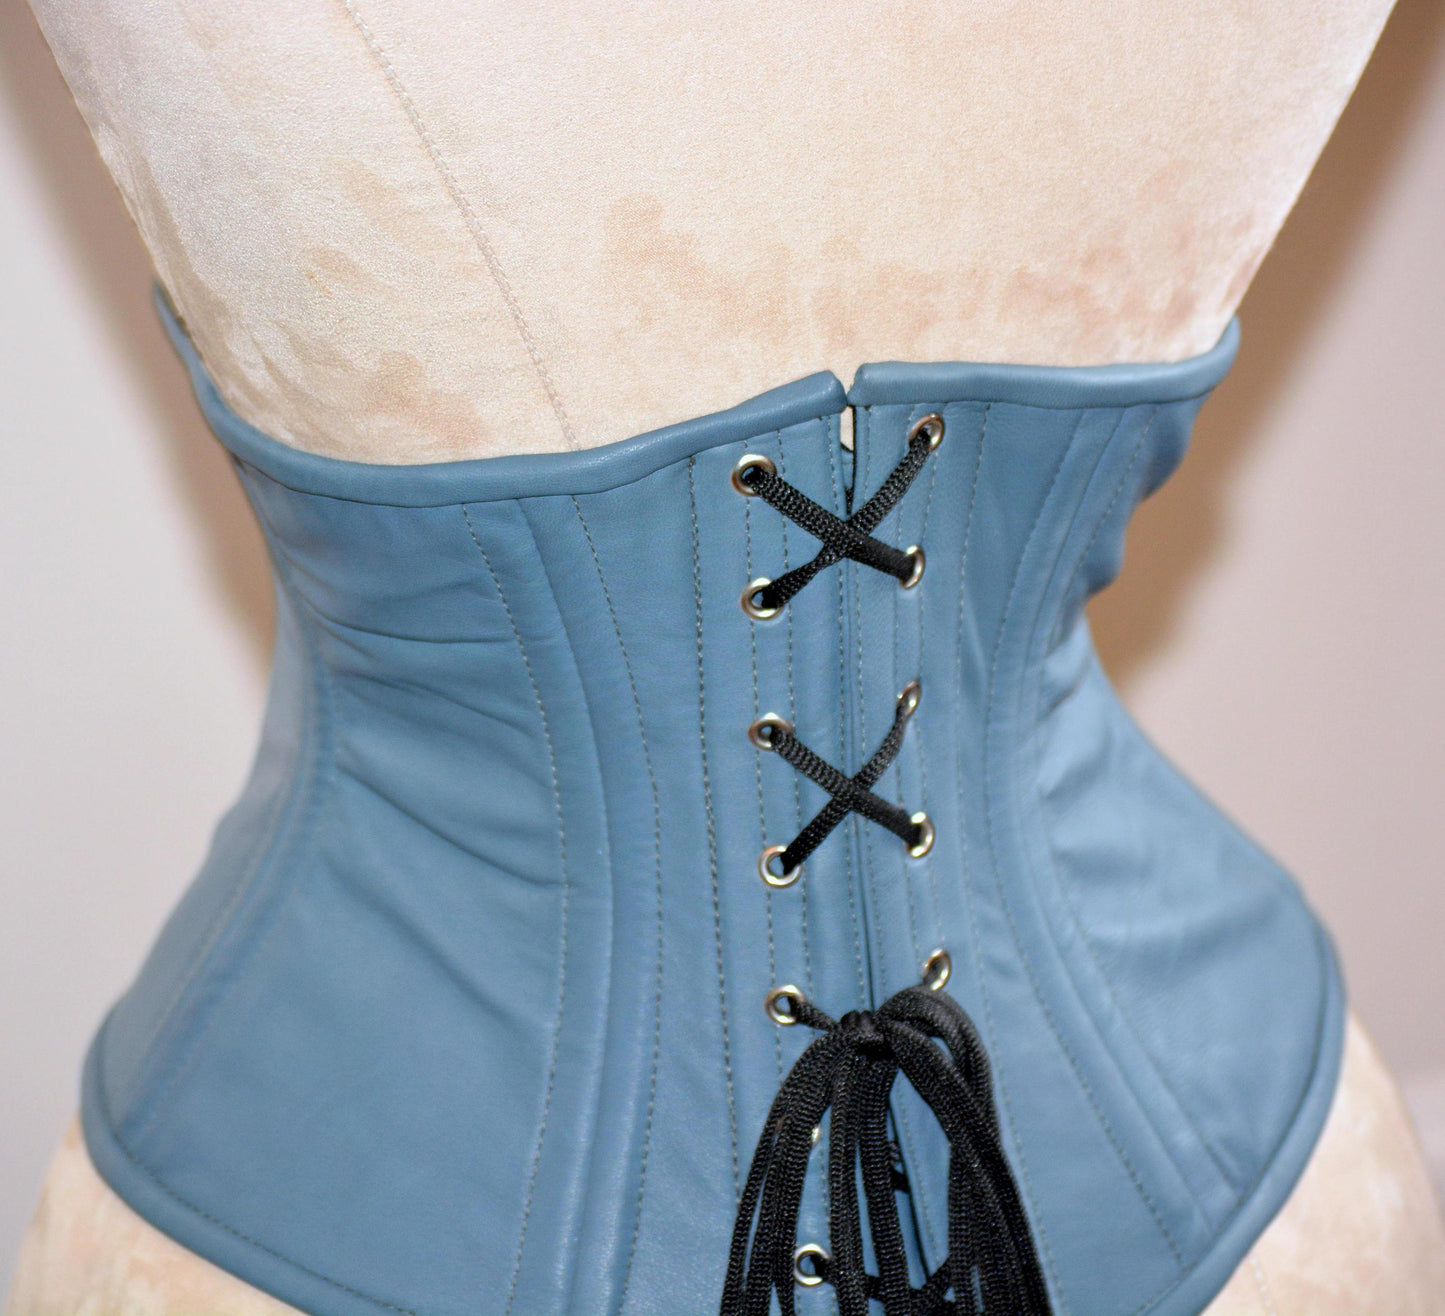 Corsettery USA - authentic steel-boned corsets from magazines covers – Corsettery  Authentic Corsets USA